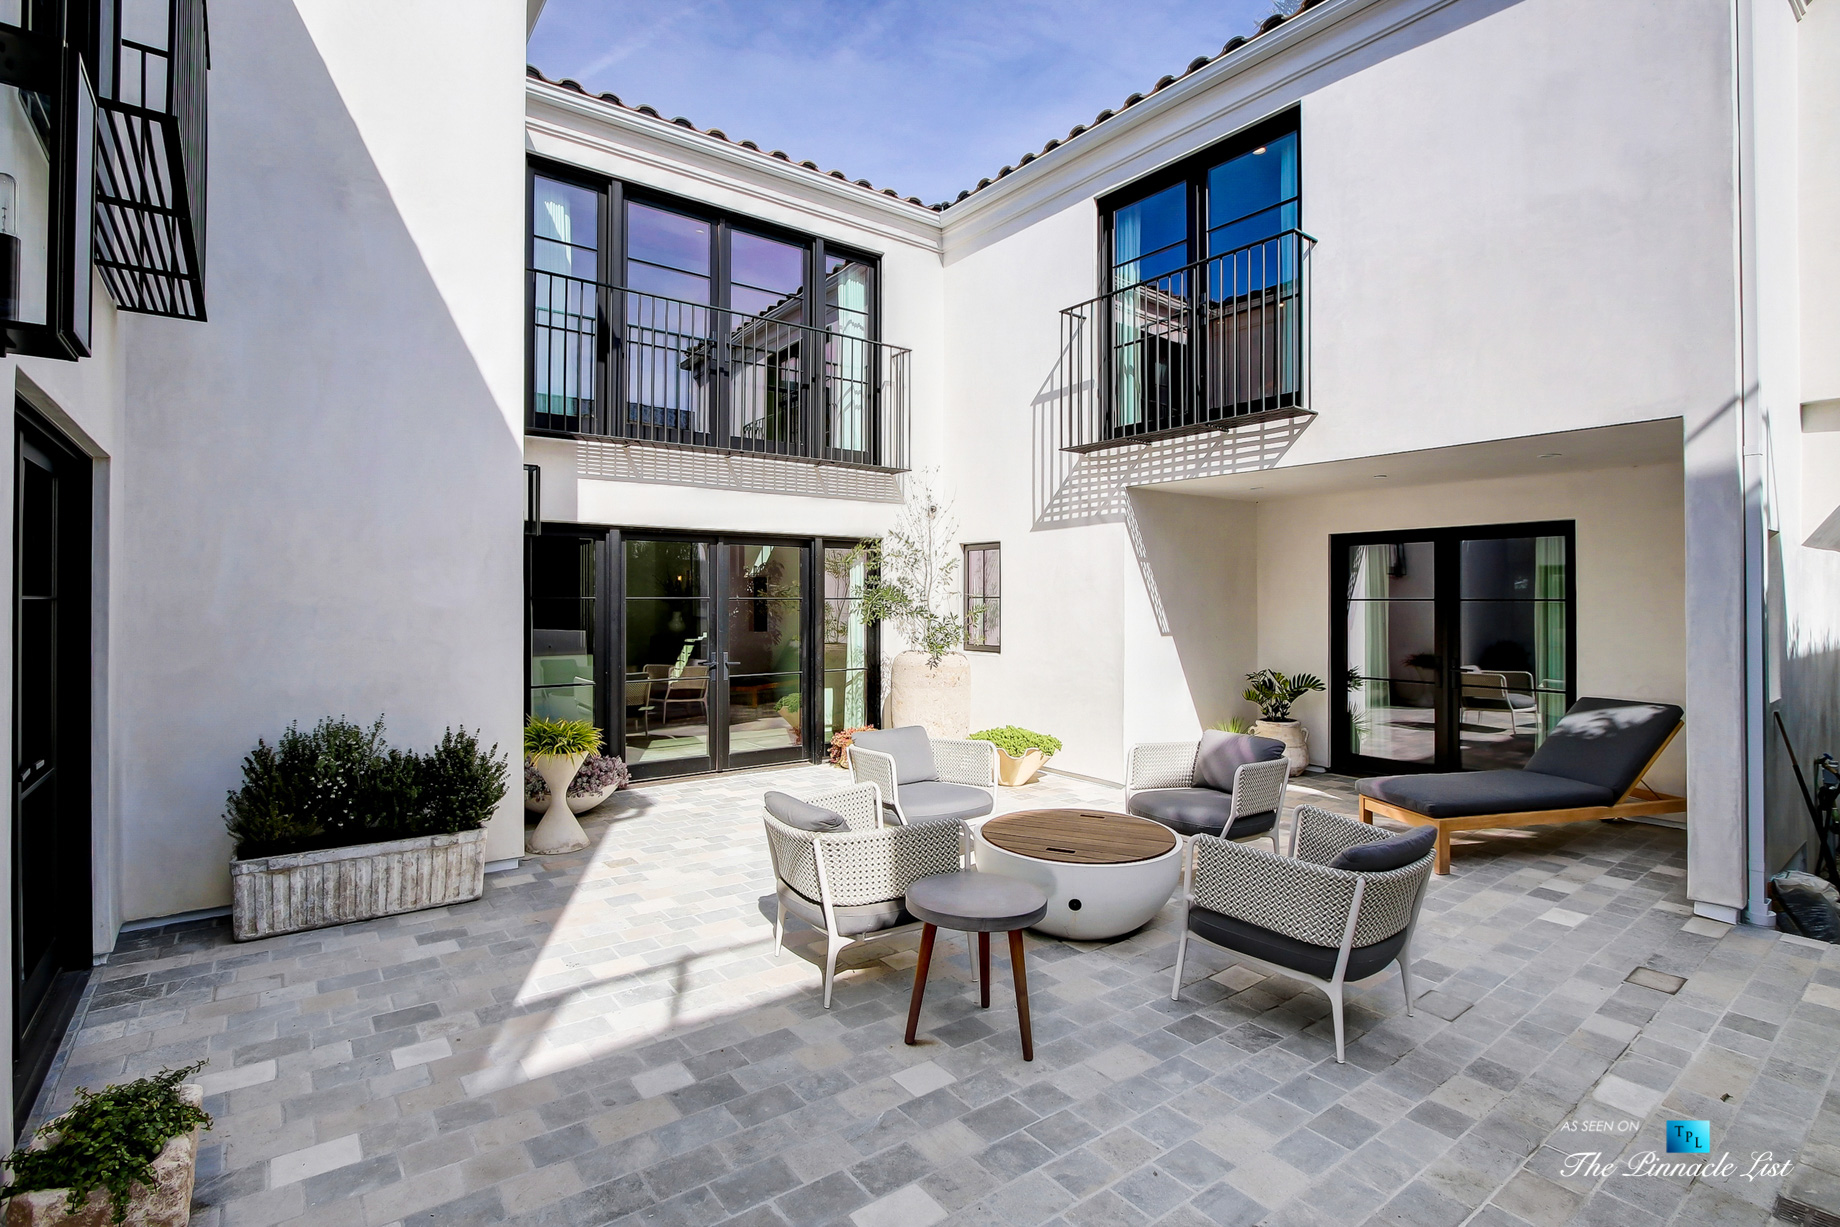 825 Highview Ave, Manhattan Beach, CA, USA - Private Exterior Courtyard - Luxury Real Estate - Modern Spanish Home